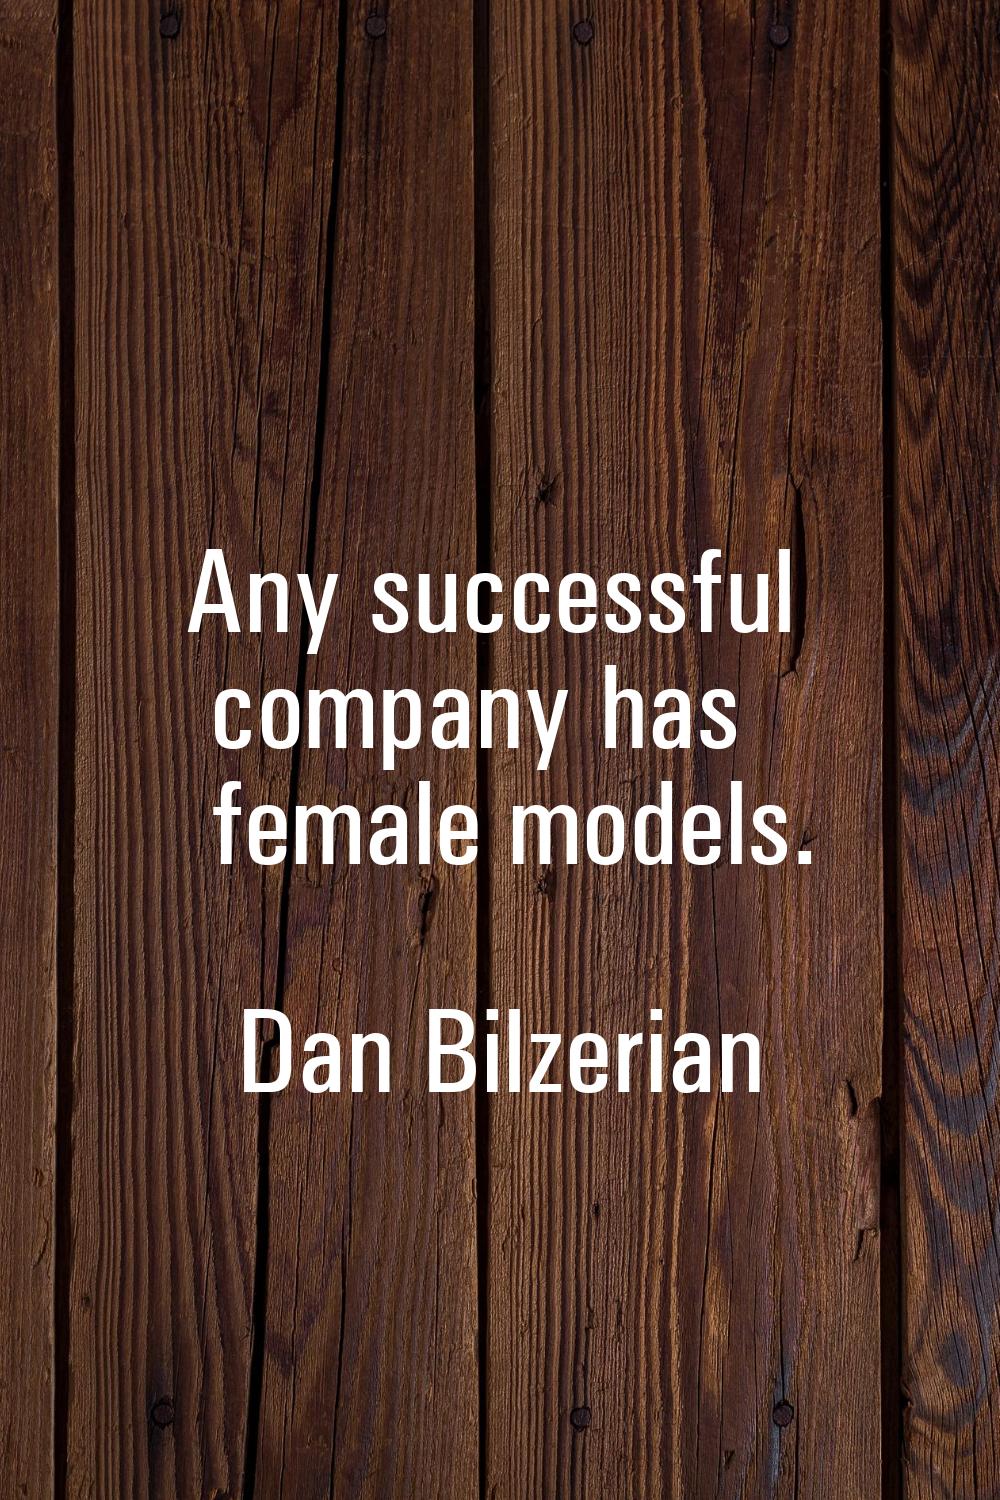 Any successful company has female models.